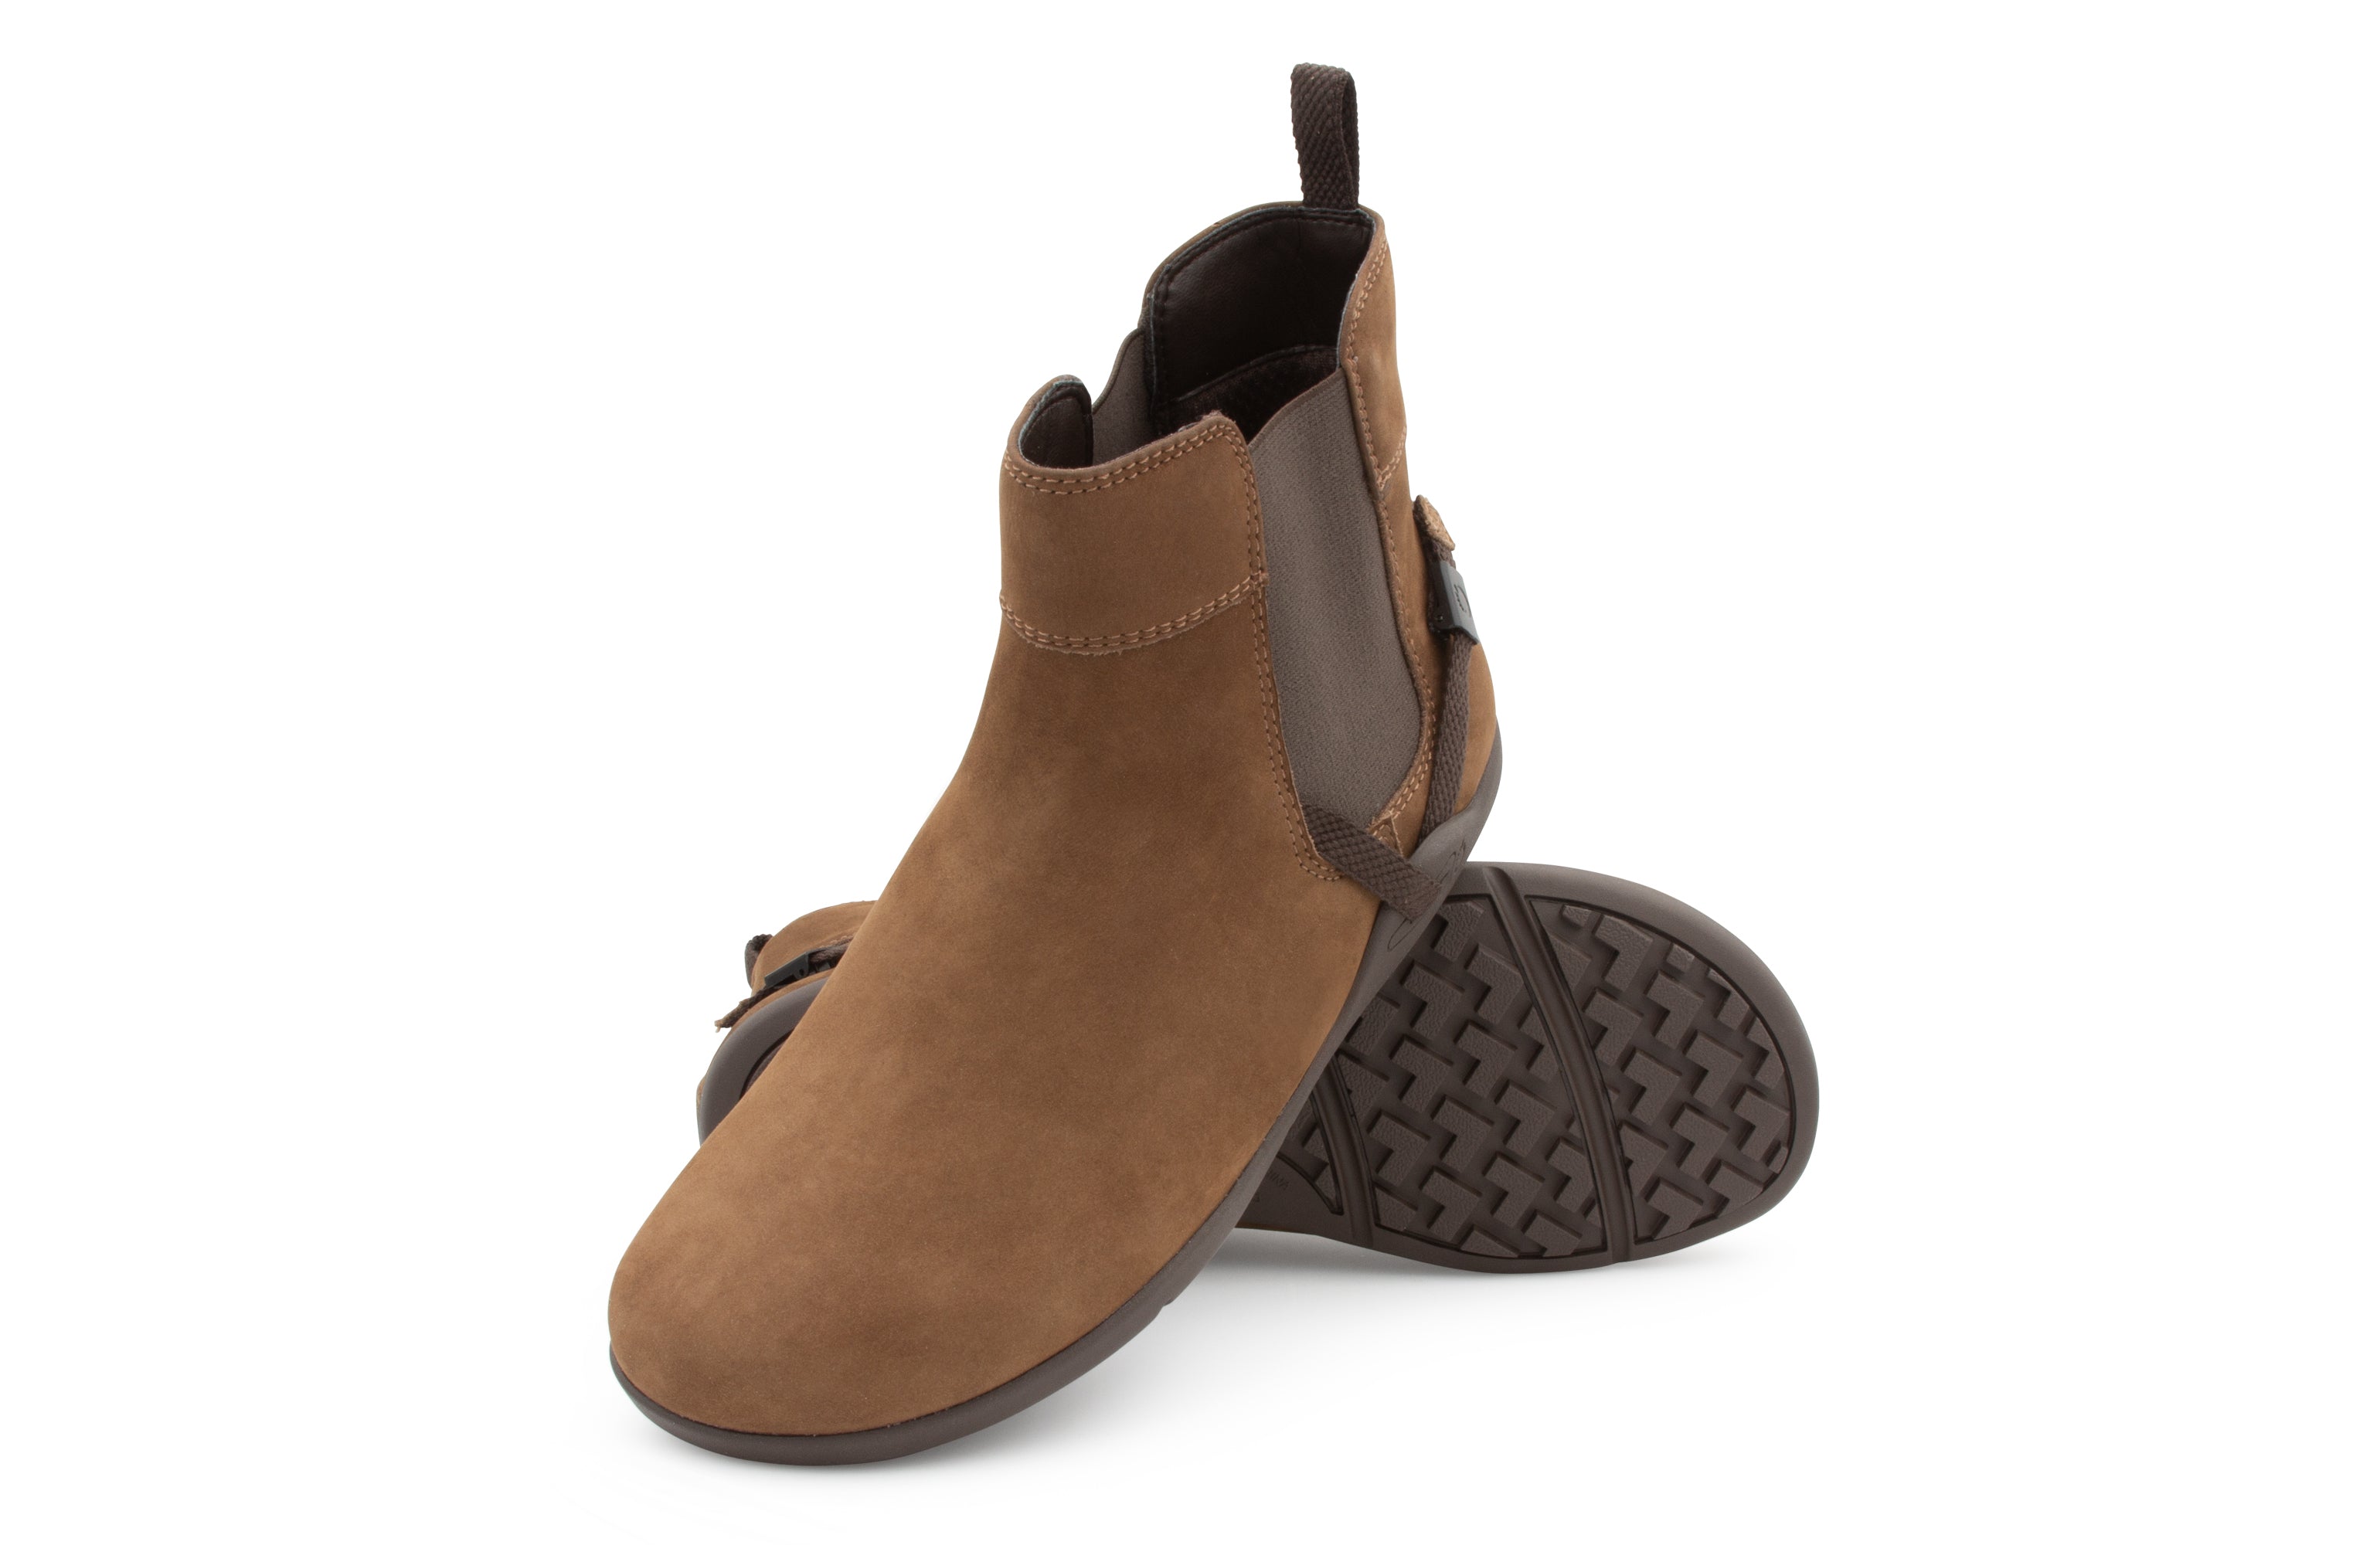 Xero Shoes Tari barfods chelsea vinterstøvler til kvinder i farven toffee, par